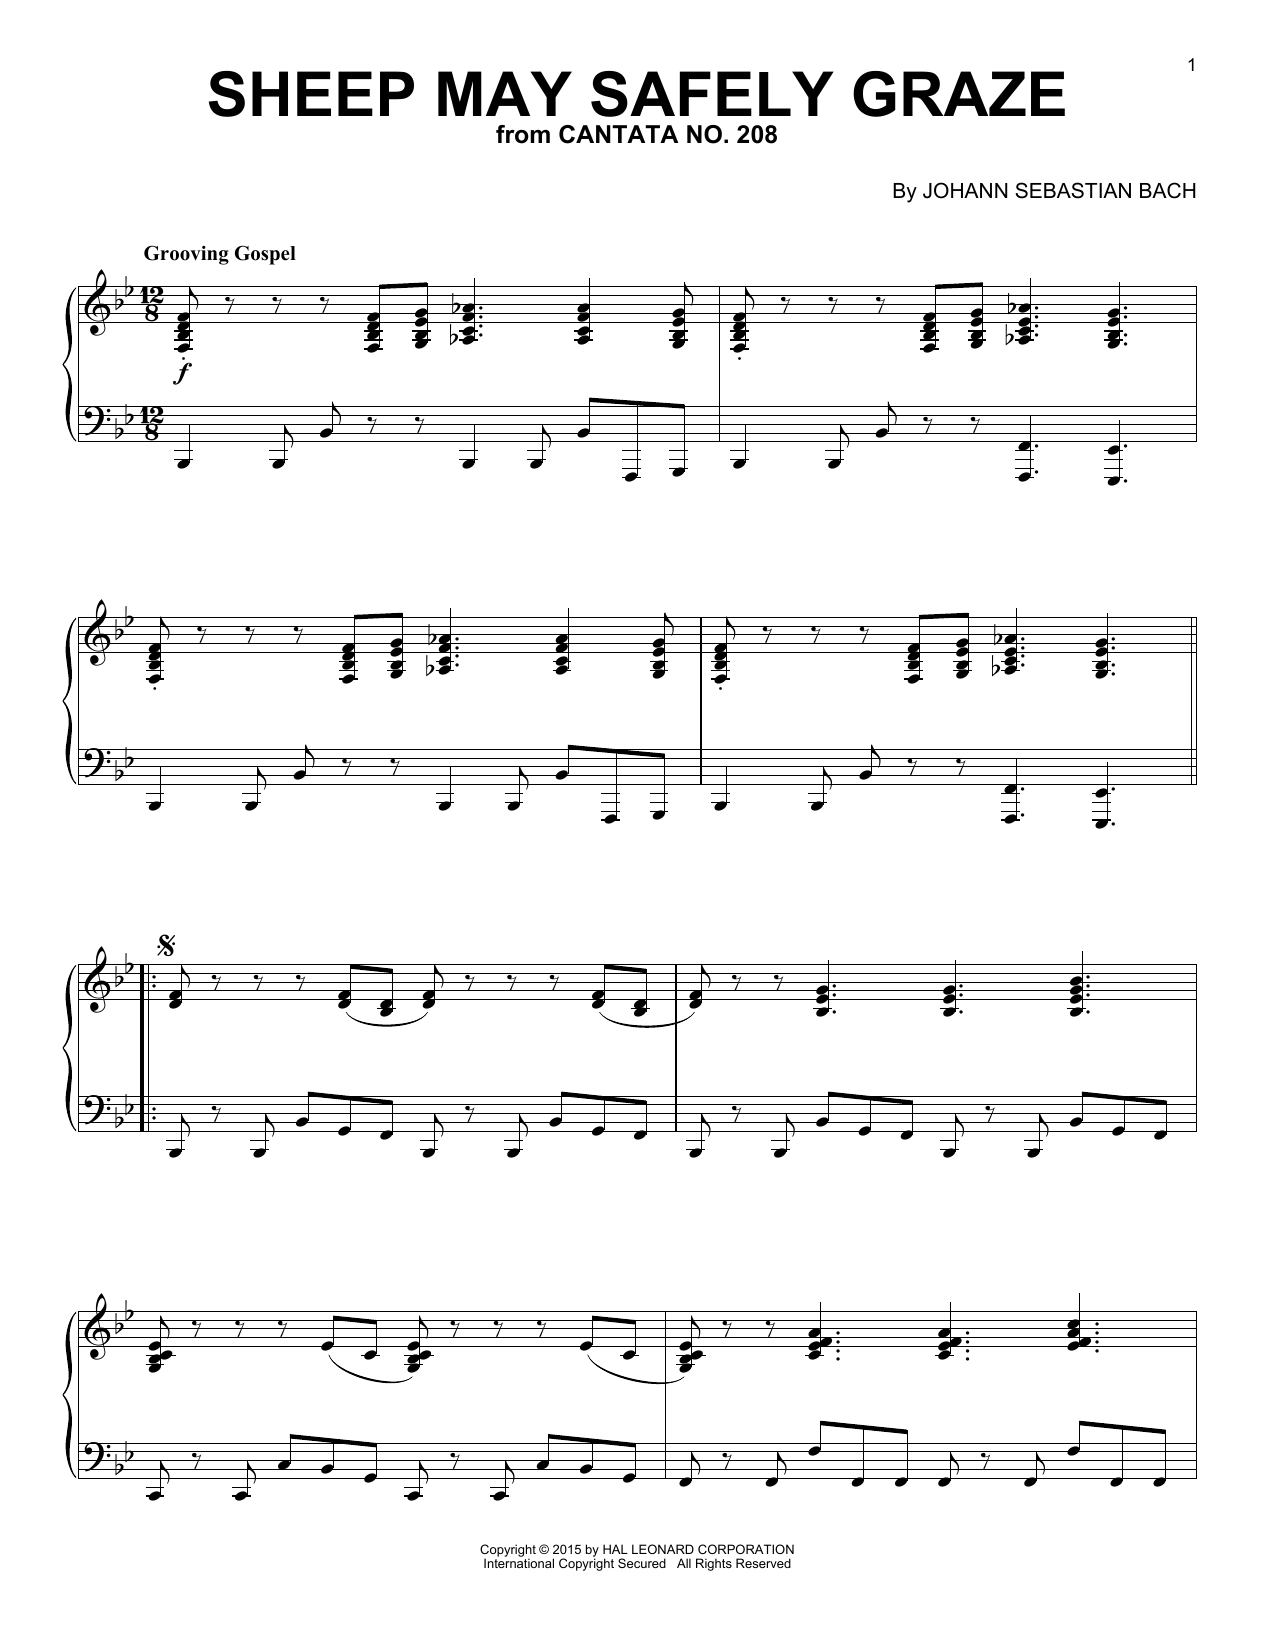 Johann Sebastian Bach Sheep May Safely Graze [Jazz version] Sheet Music Notes & Chords for Piano - Download or Print PDF